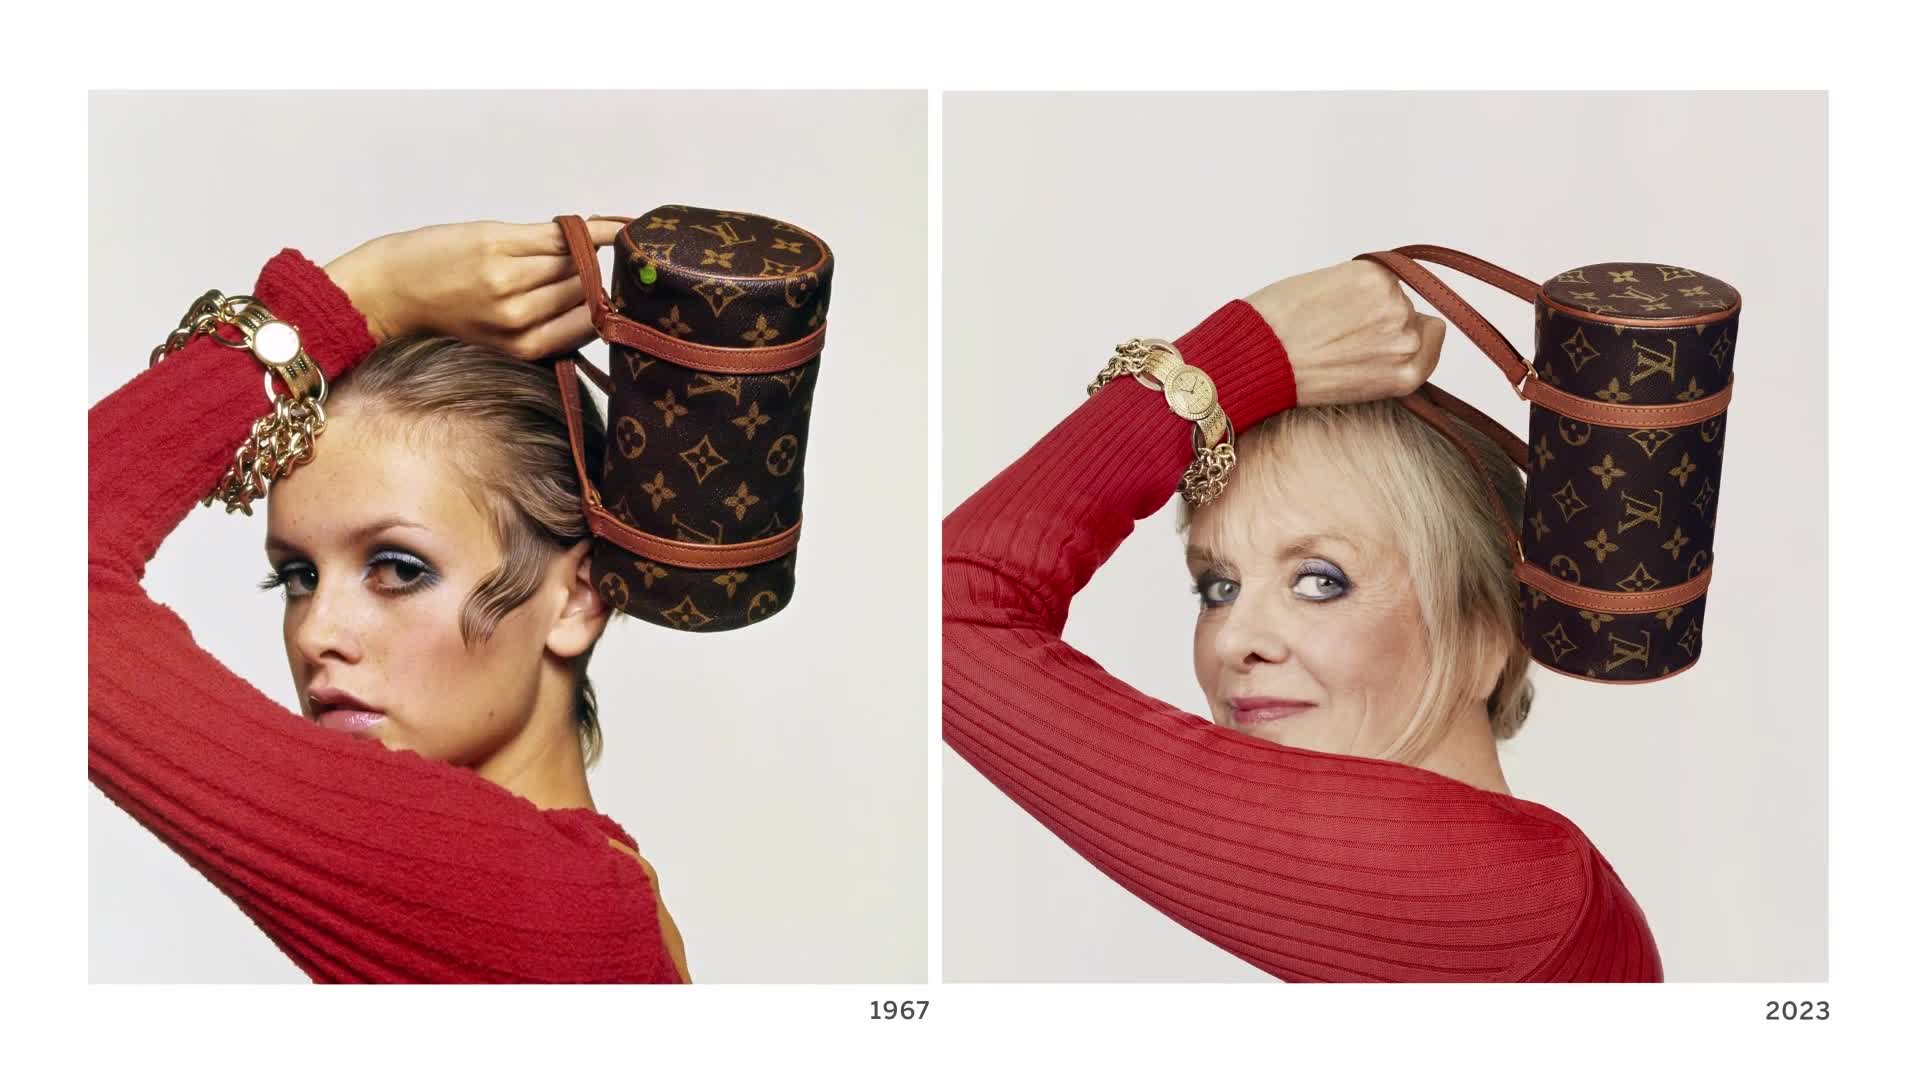 Watch '60s Supermodel Twiggy Recreates a Classic Photo - 56 Years